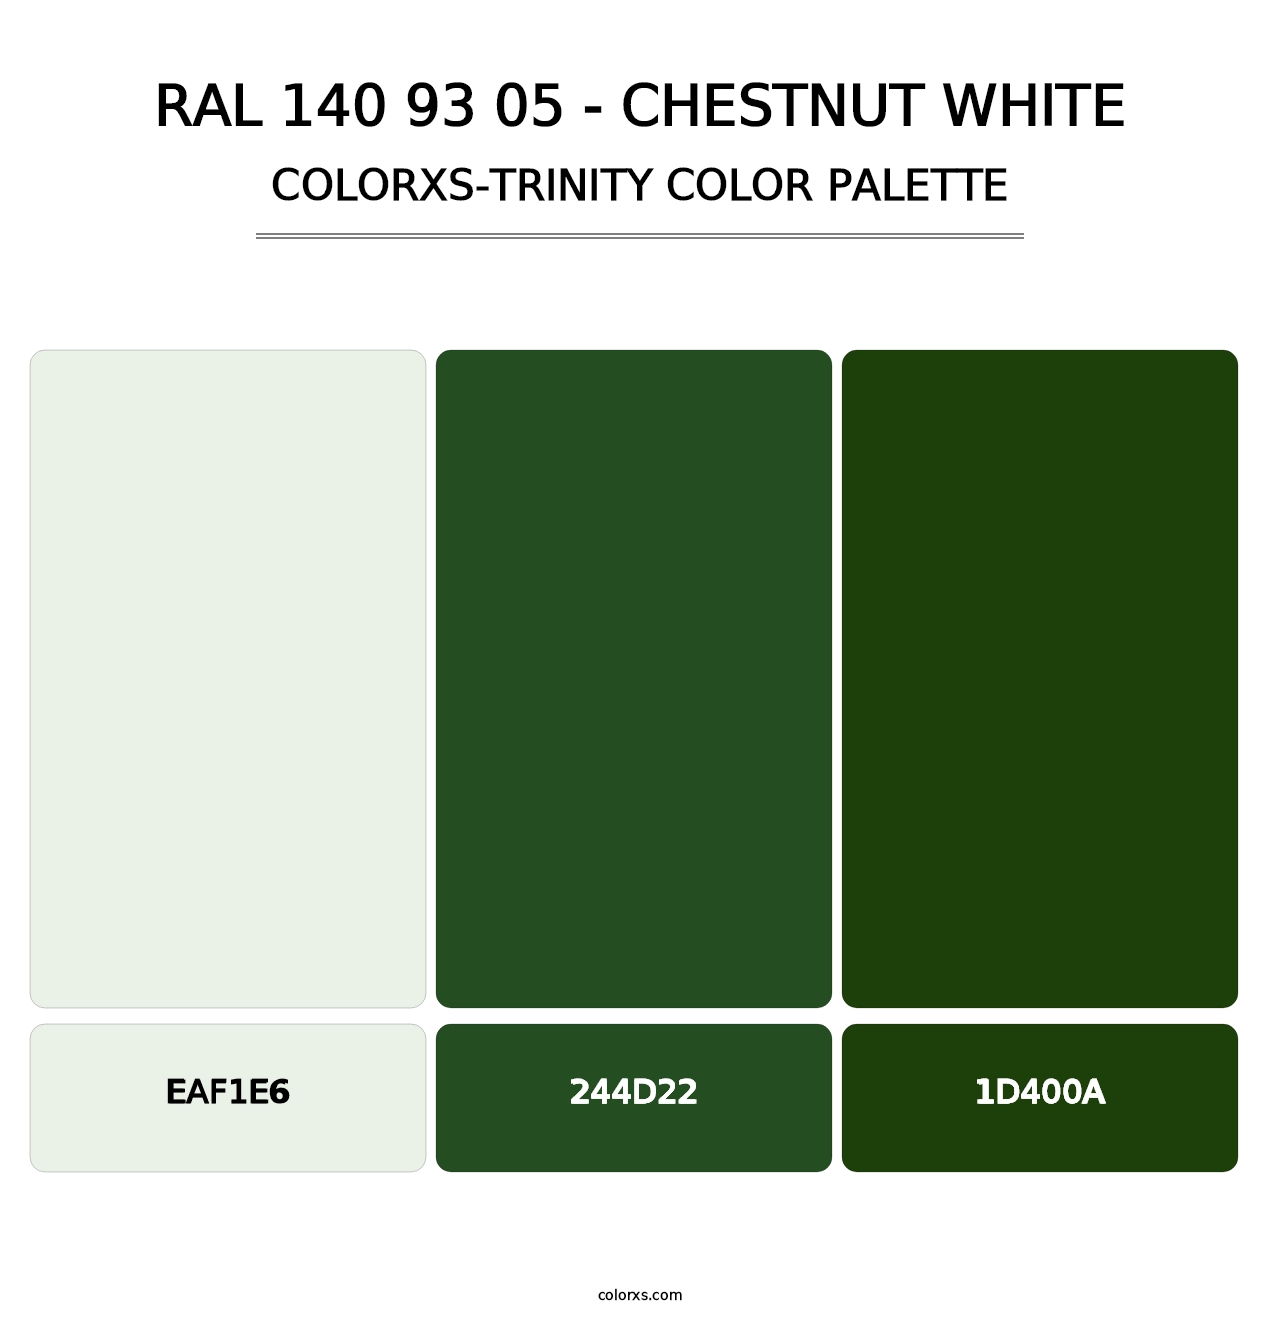 RAL 140 93 05 - Chestnut White - Colorxs Trinity Palette